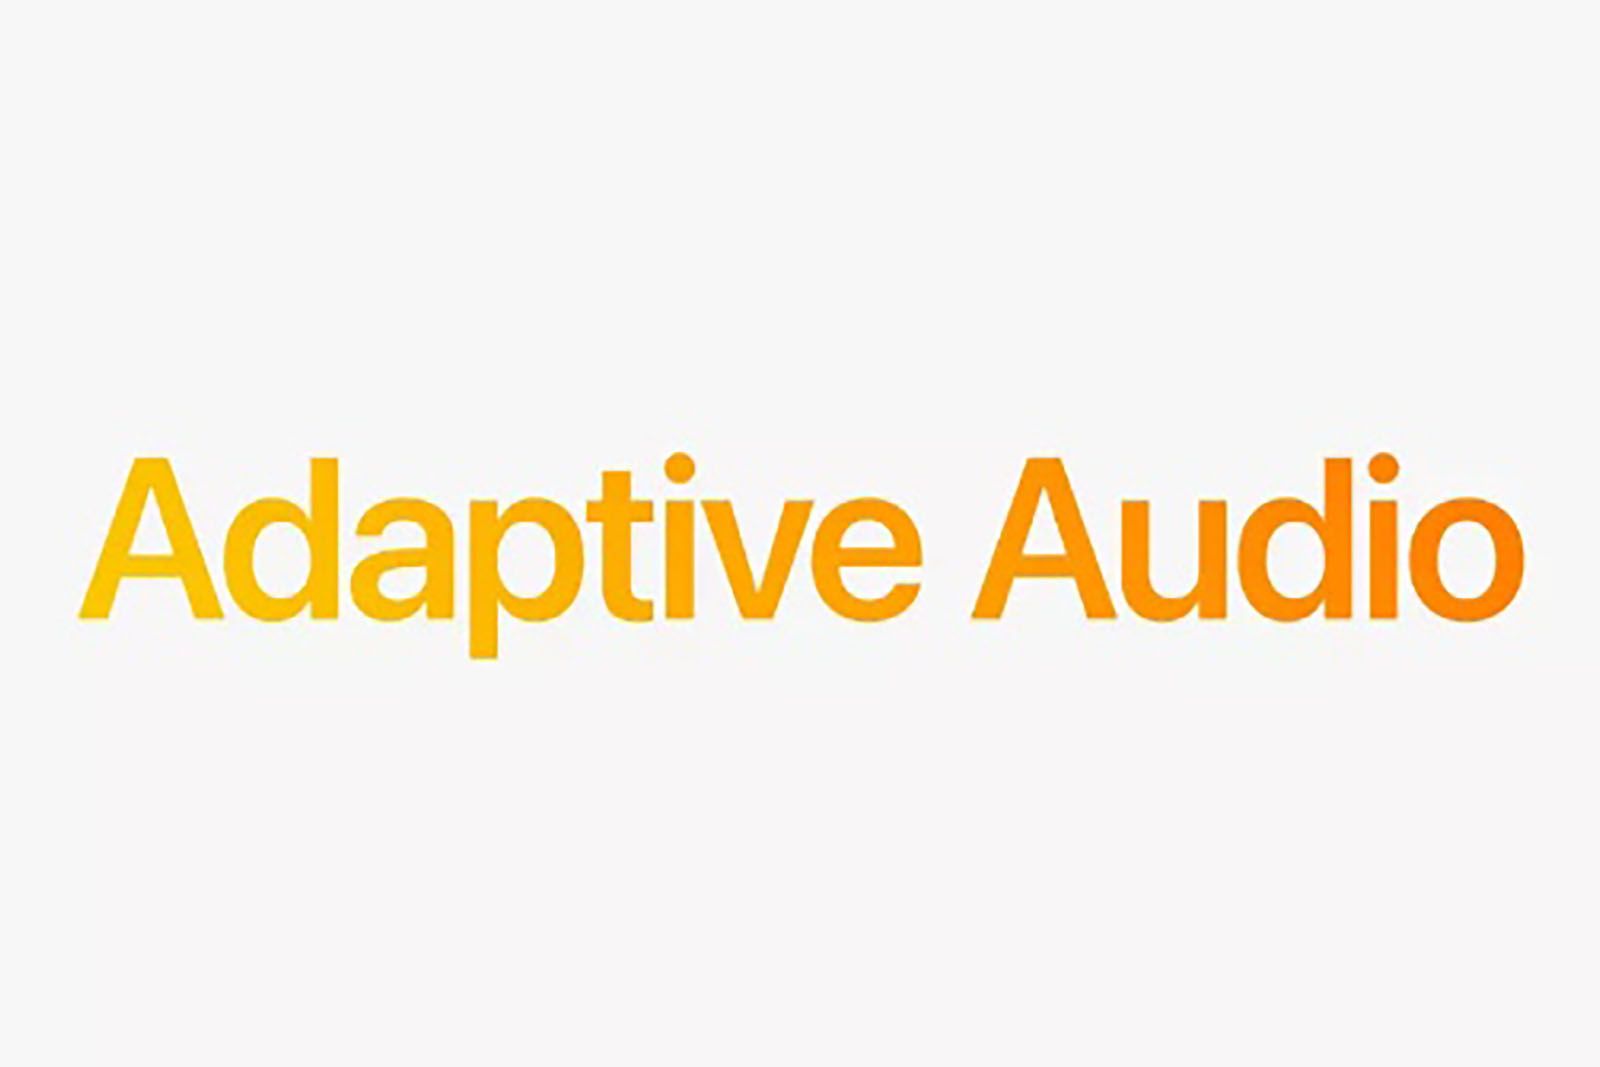 Apple Adaptive Audio